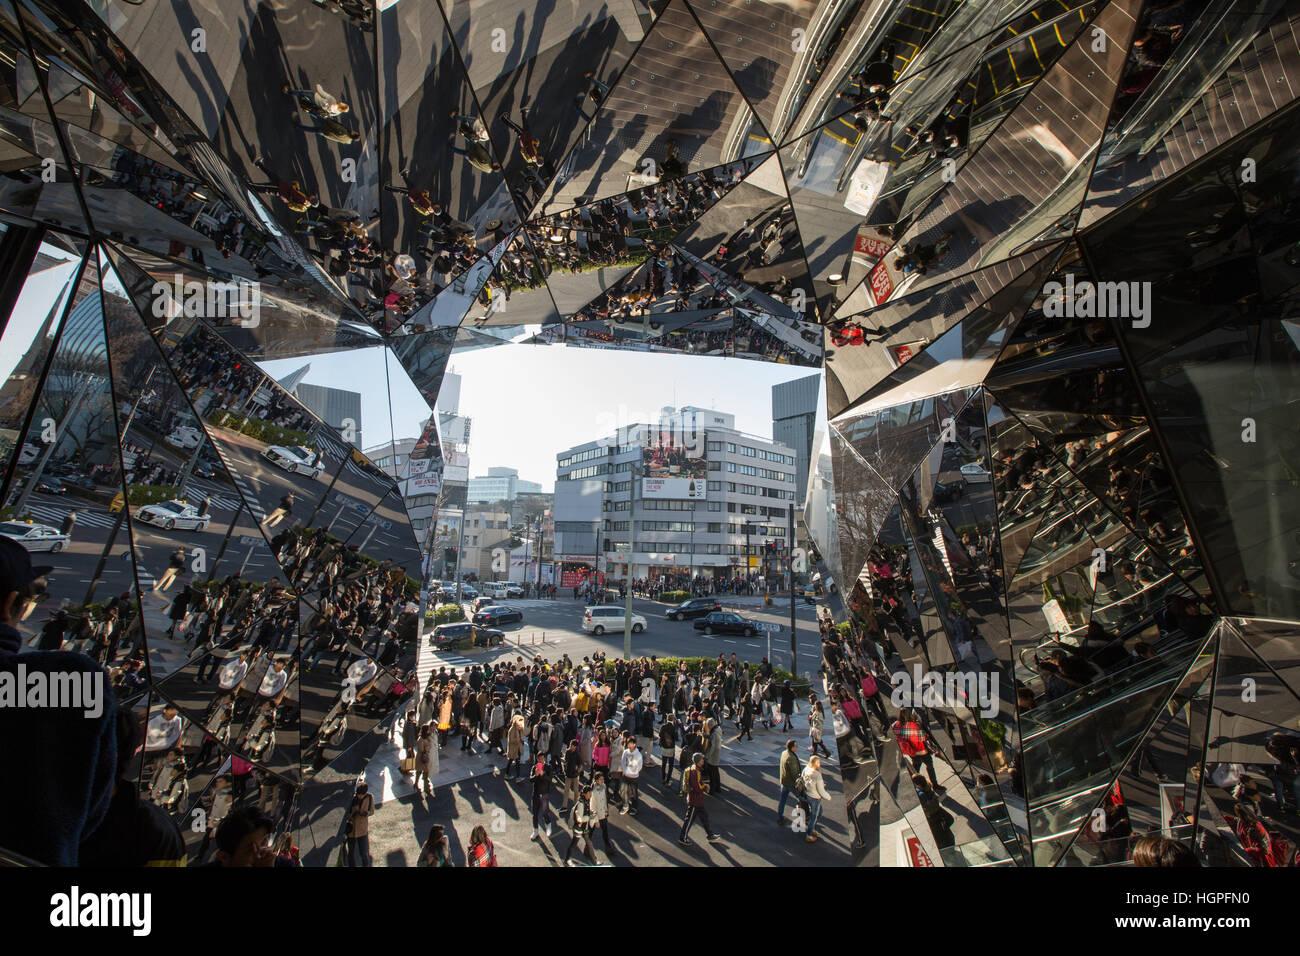 The kaleidoscope mirrored interior of the Tokyo Plaza shopping mall, in Harajuku, in Tokyo, Japan. Stock Photo